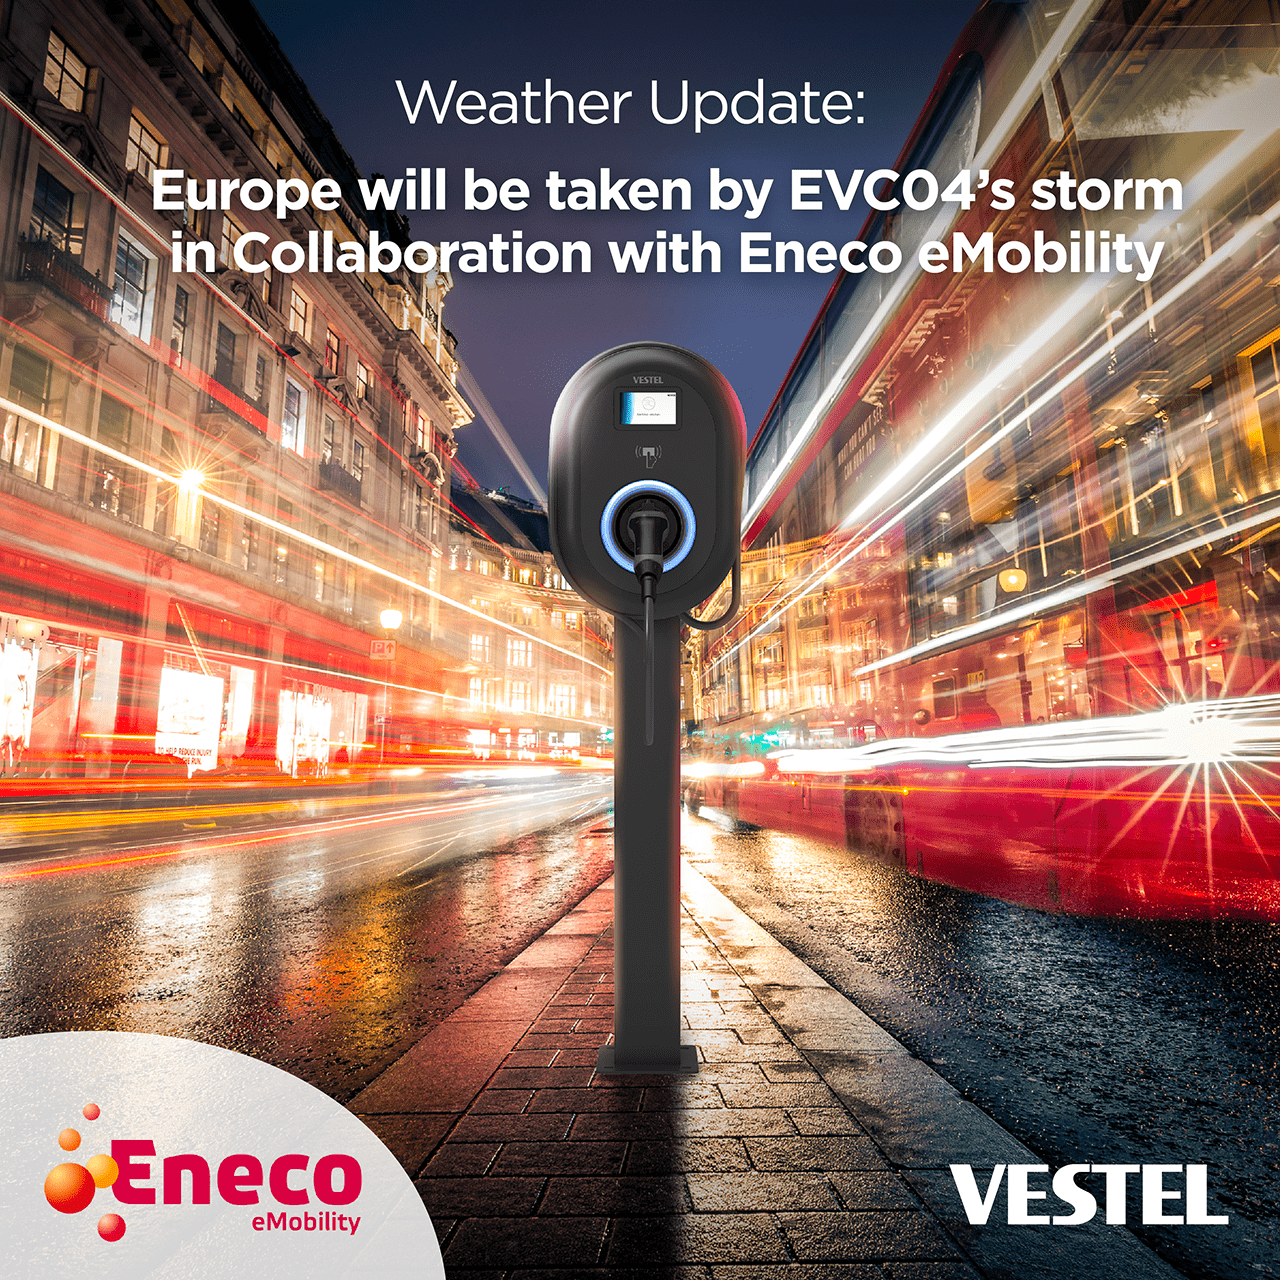 Vestel and Eneco eMobility partner to bring ultra-efficient EV charging solution to Europe